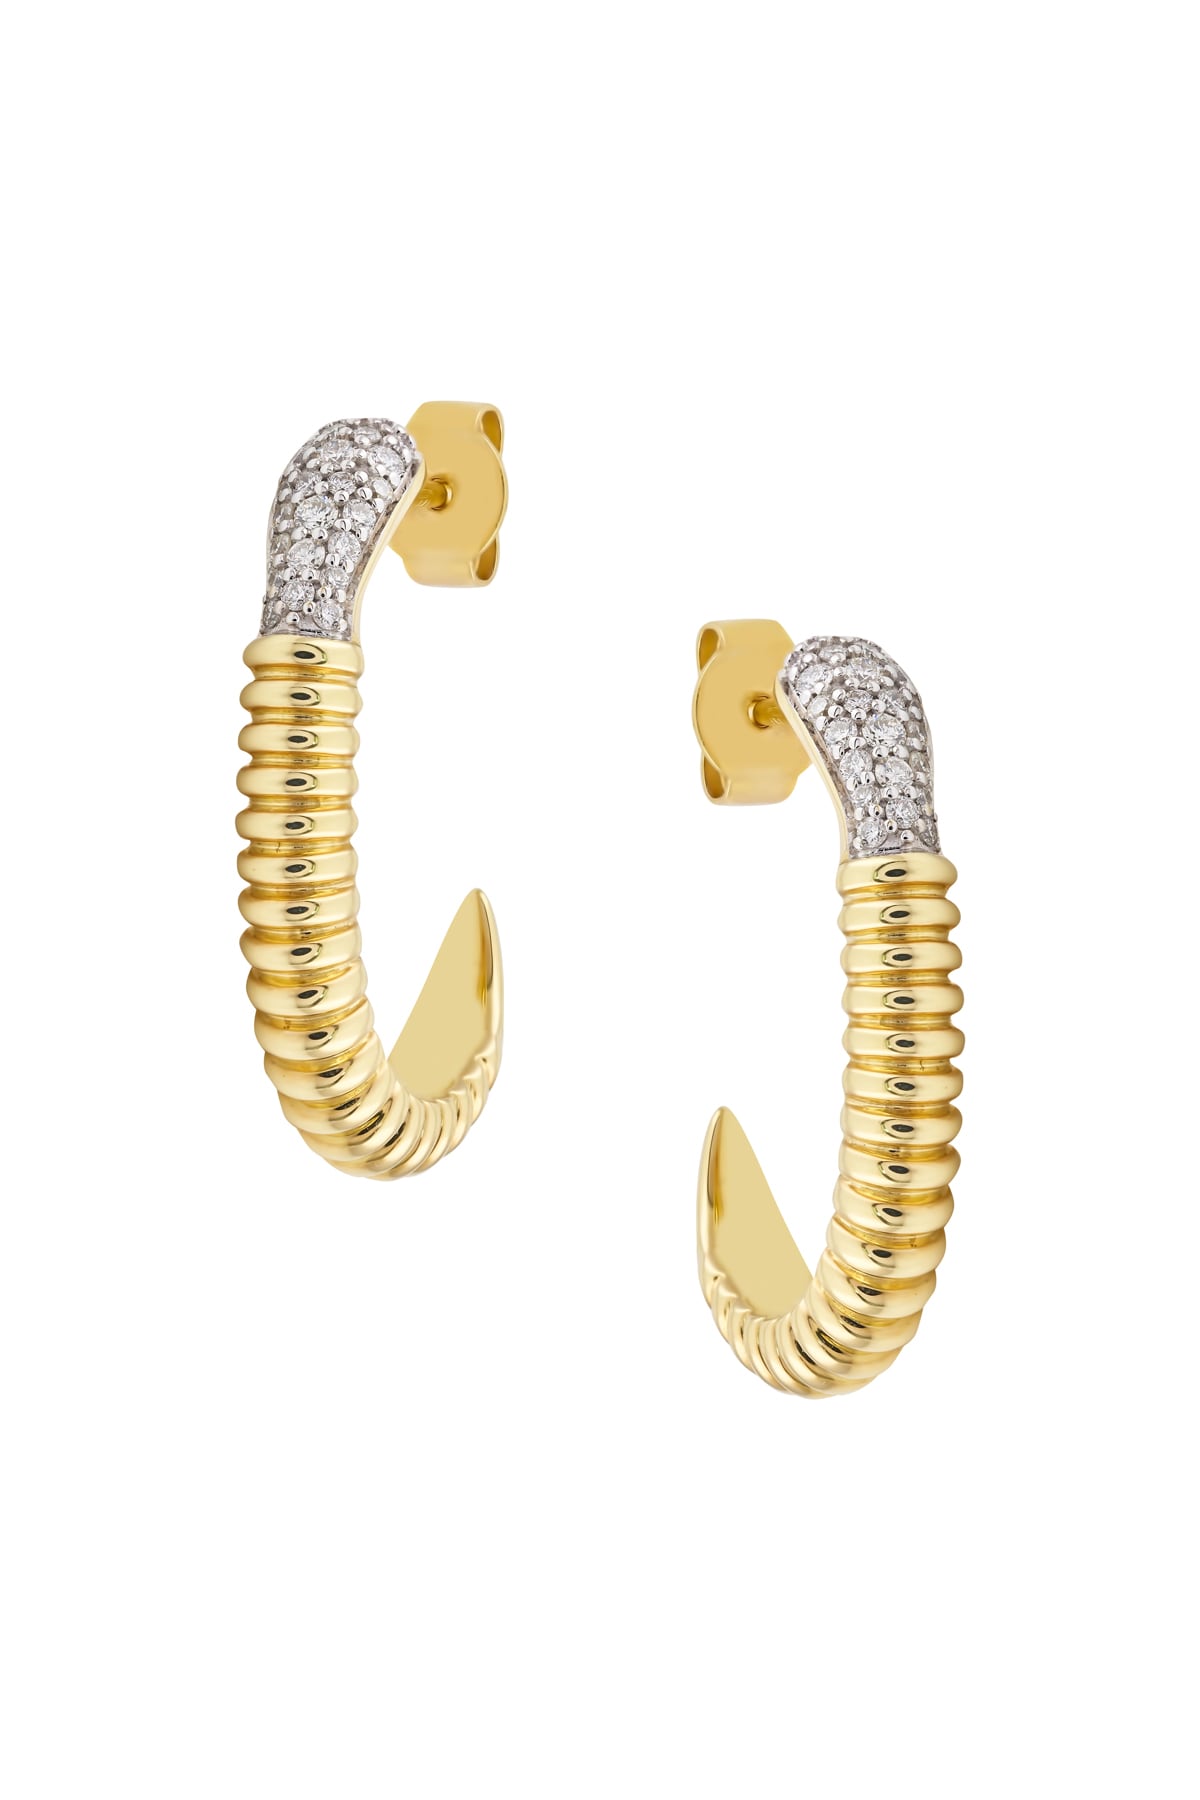 Diamond Half Hoop Earrings in Yellow Gold from LeGassick.